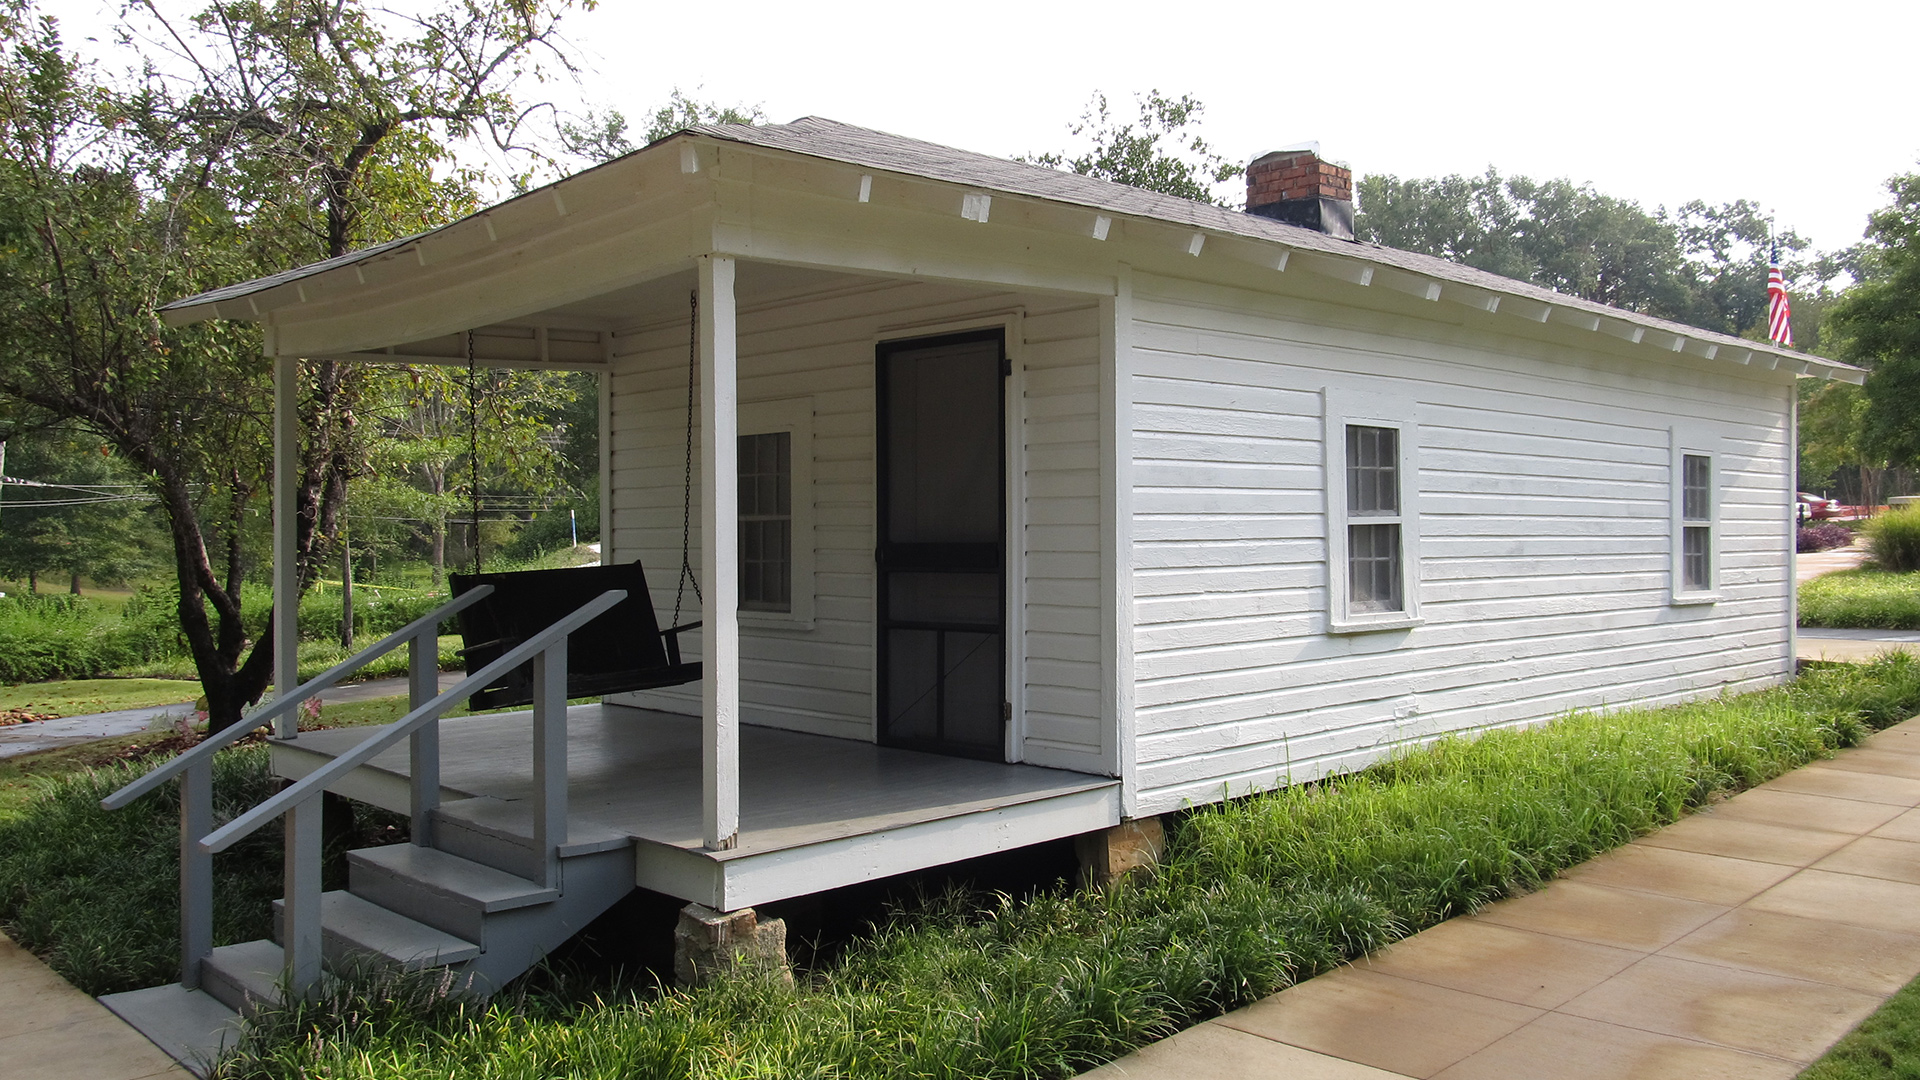 The humble home in Tupelo where Elvis Presley was born